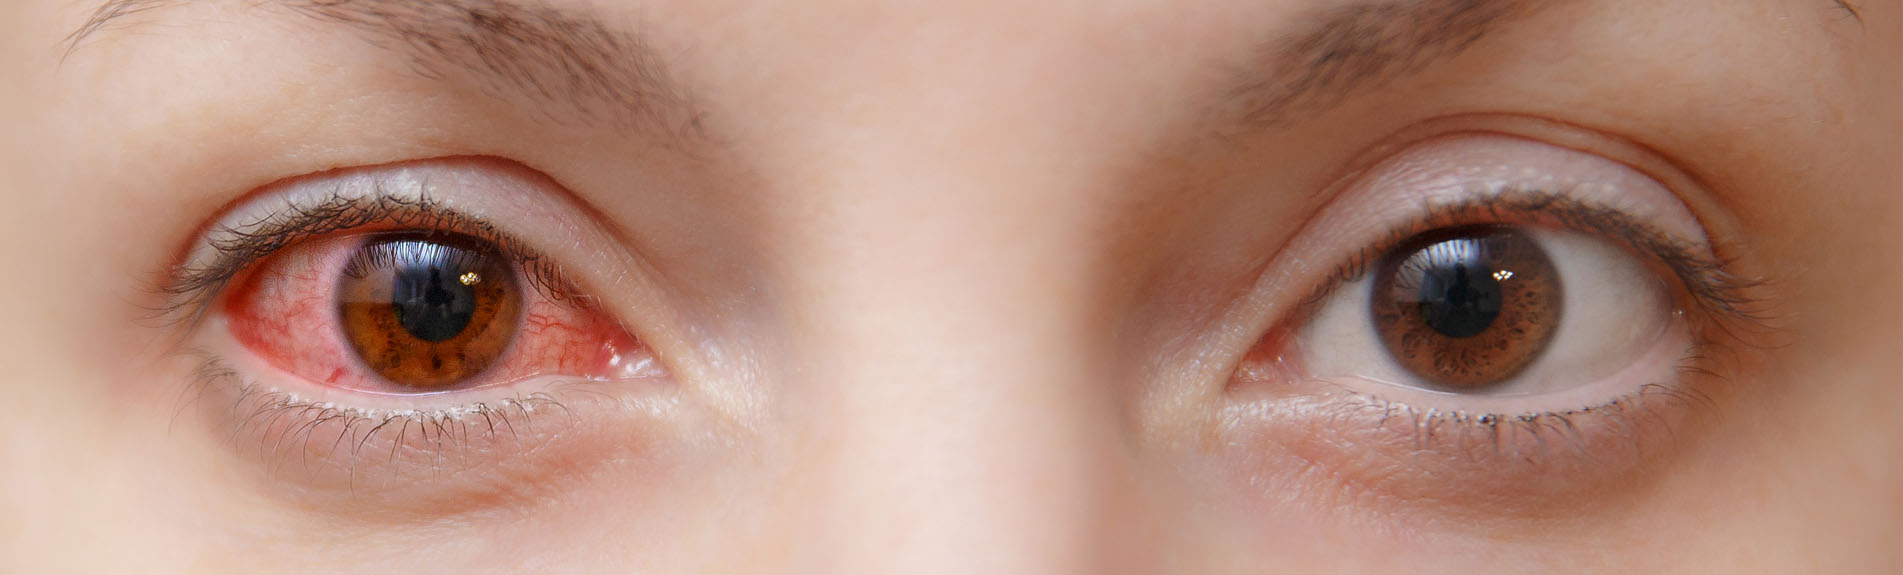 Conjunctivitis, pink eye